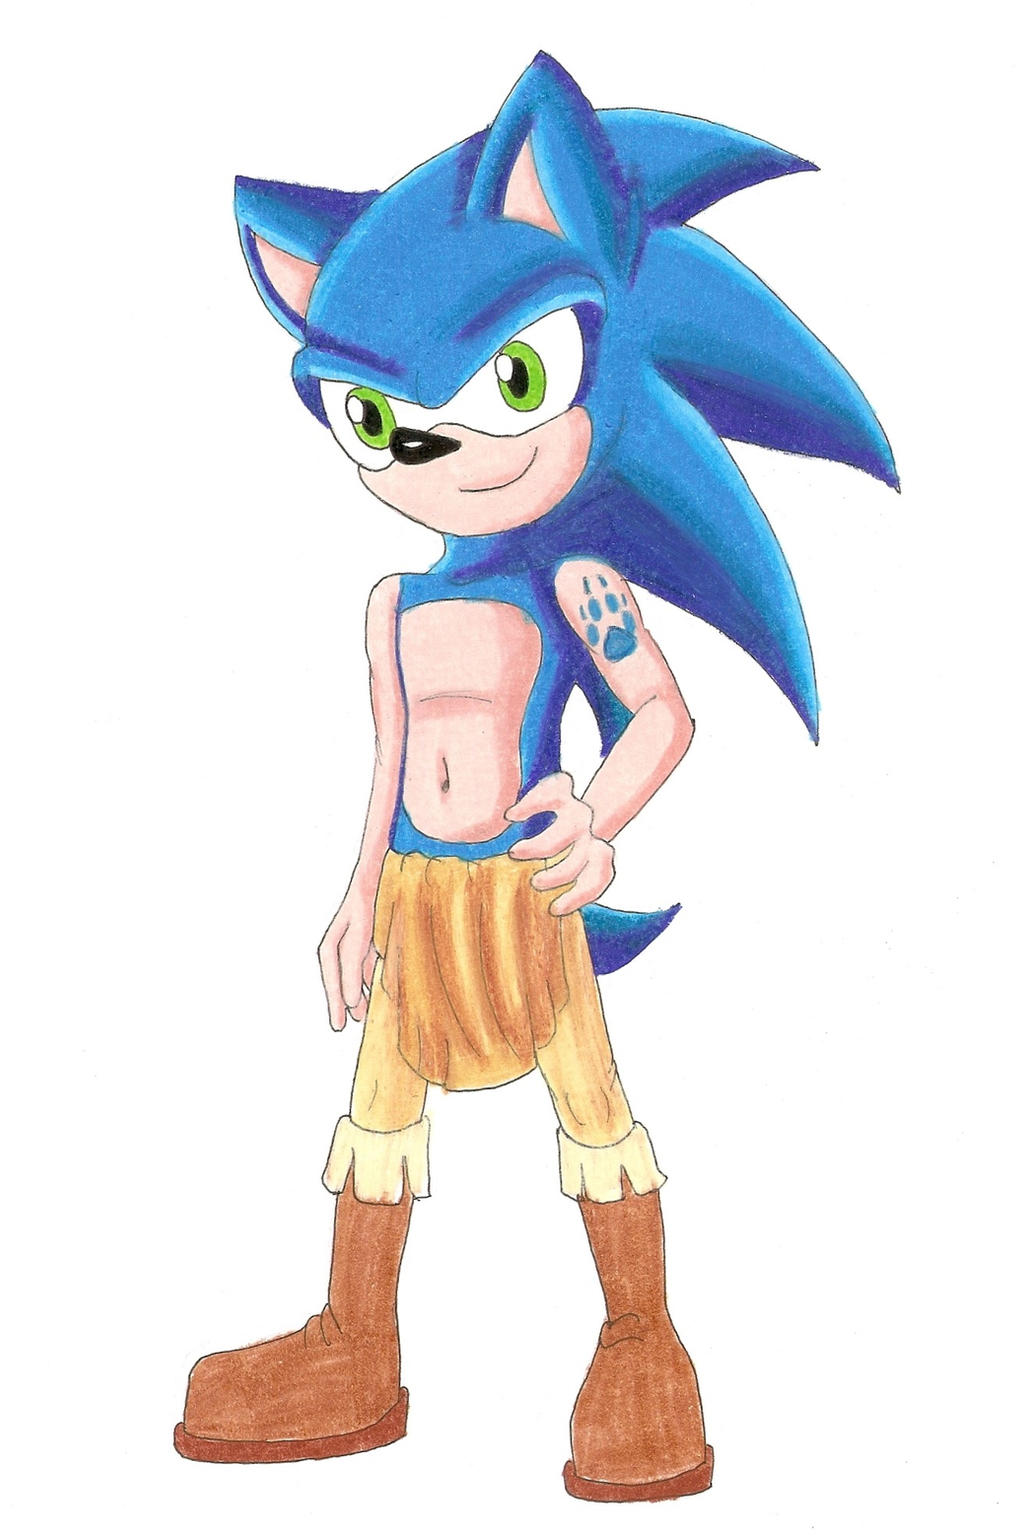 Sonic the Hedgehog 2020 by GothNebula on DeviantArt